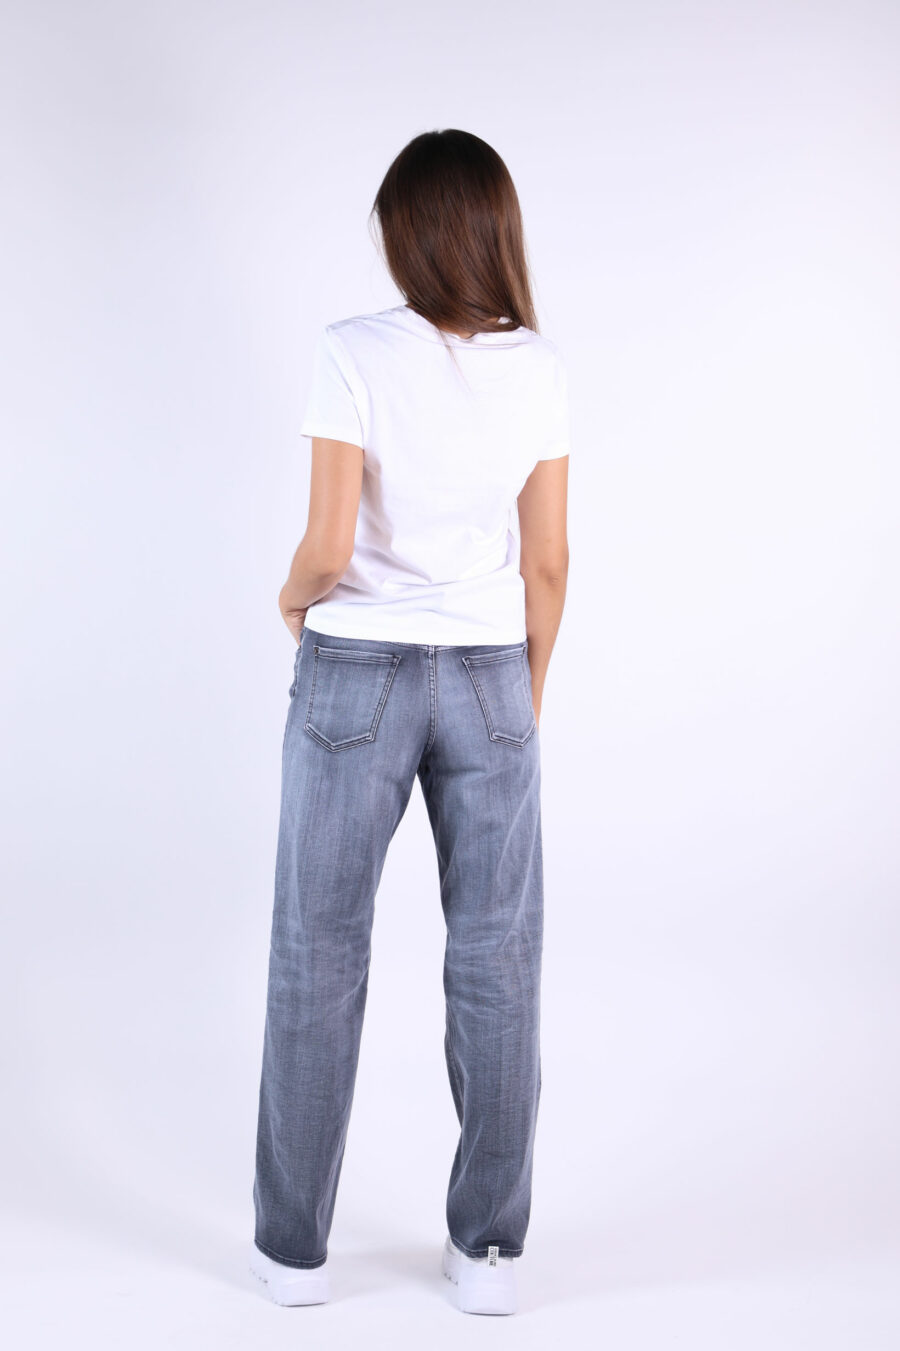 Jeans "San Diego jean" noir usé - 361223054662201936 2